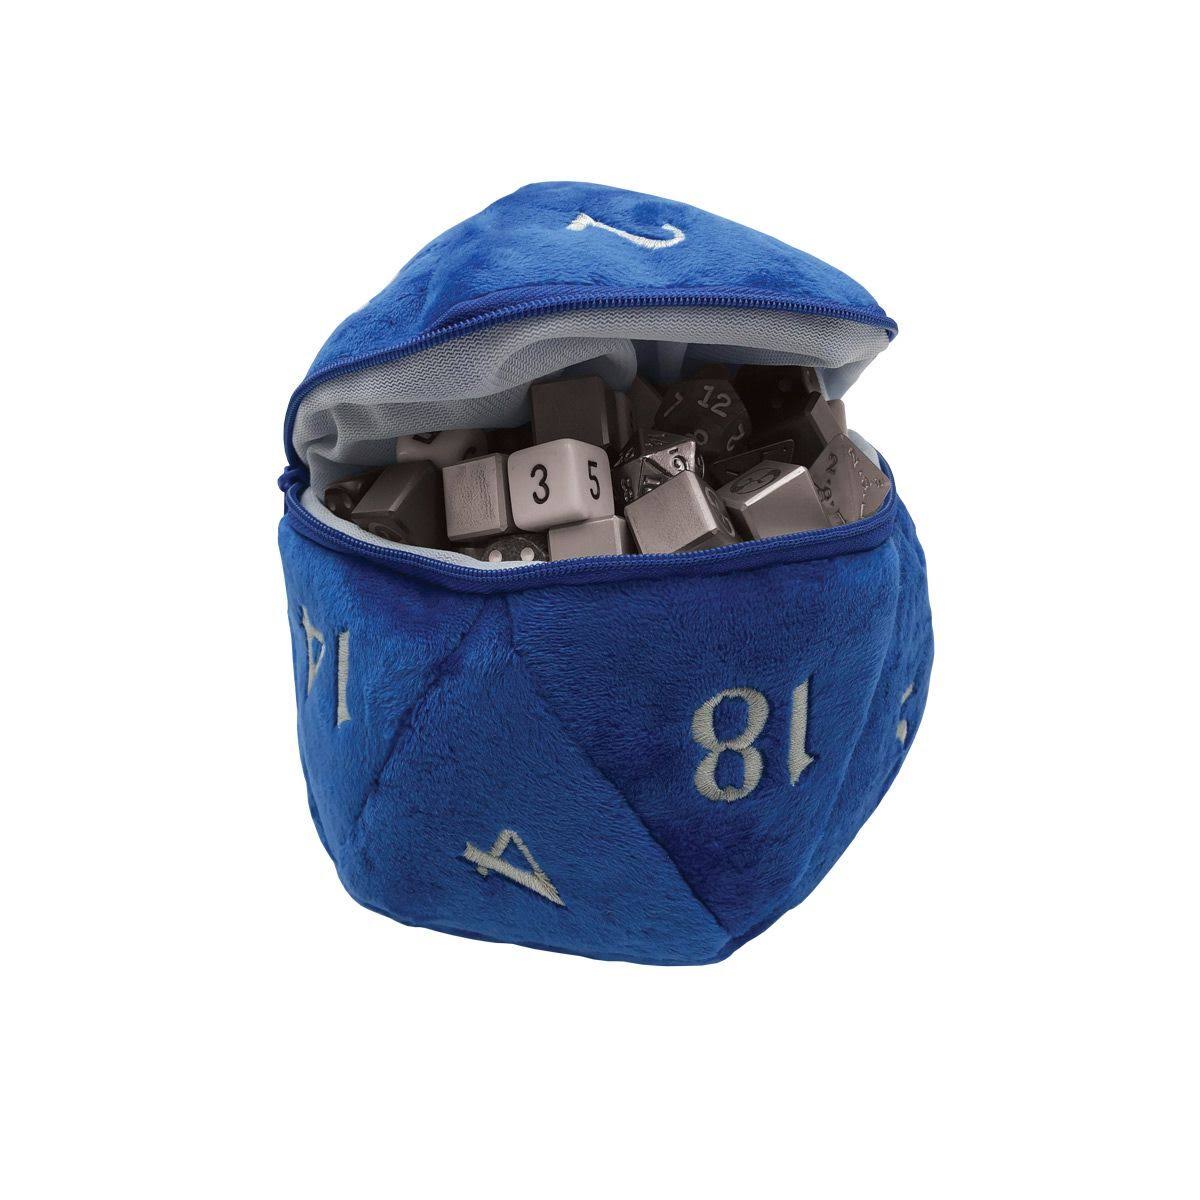 Dungeons & Dragons D20 Plush Dice Bag - Blue